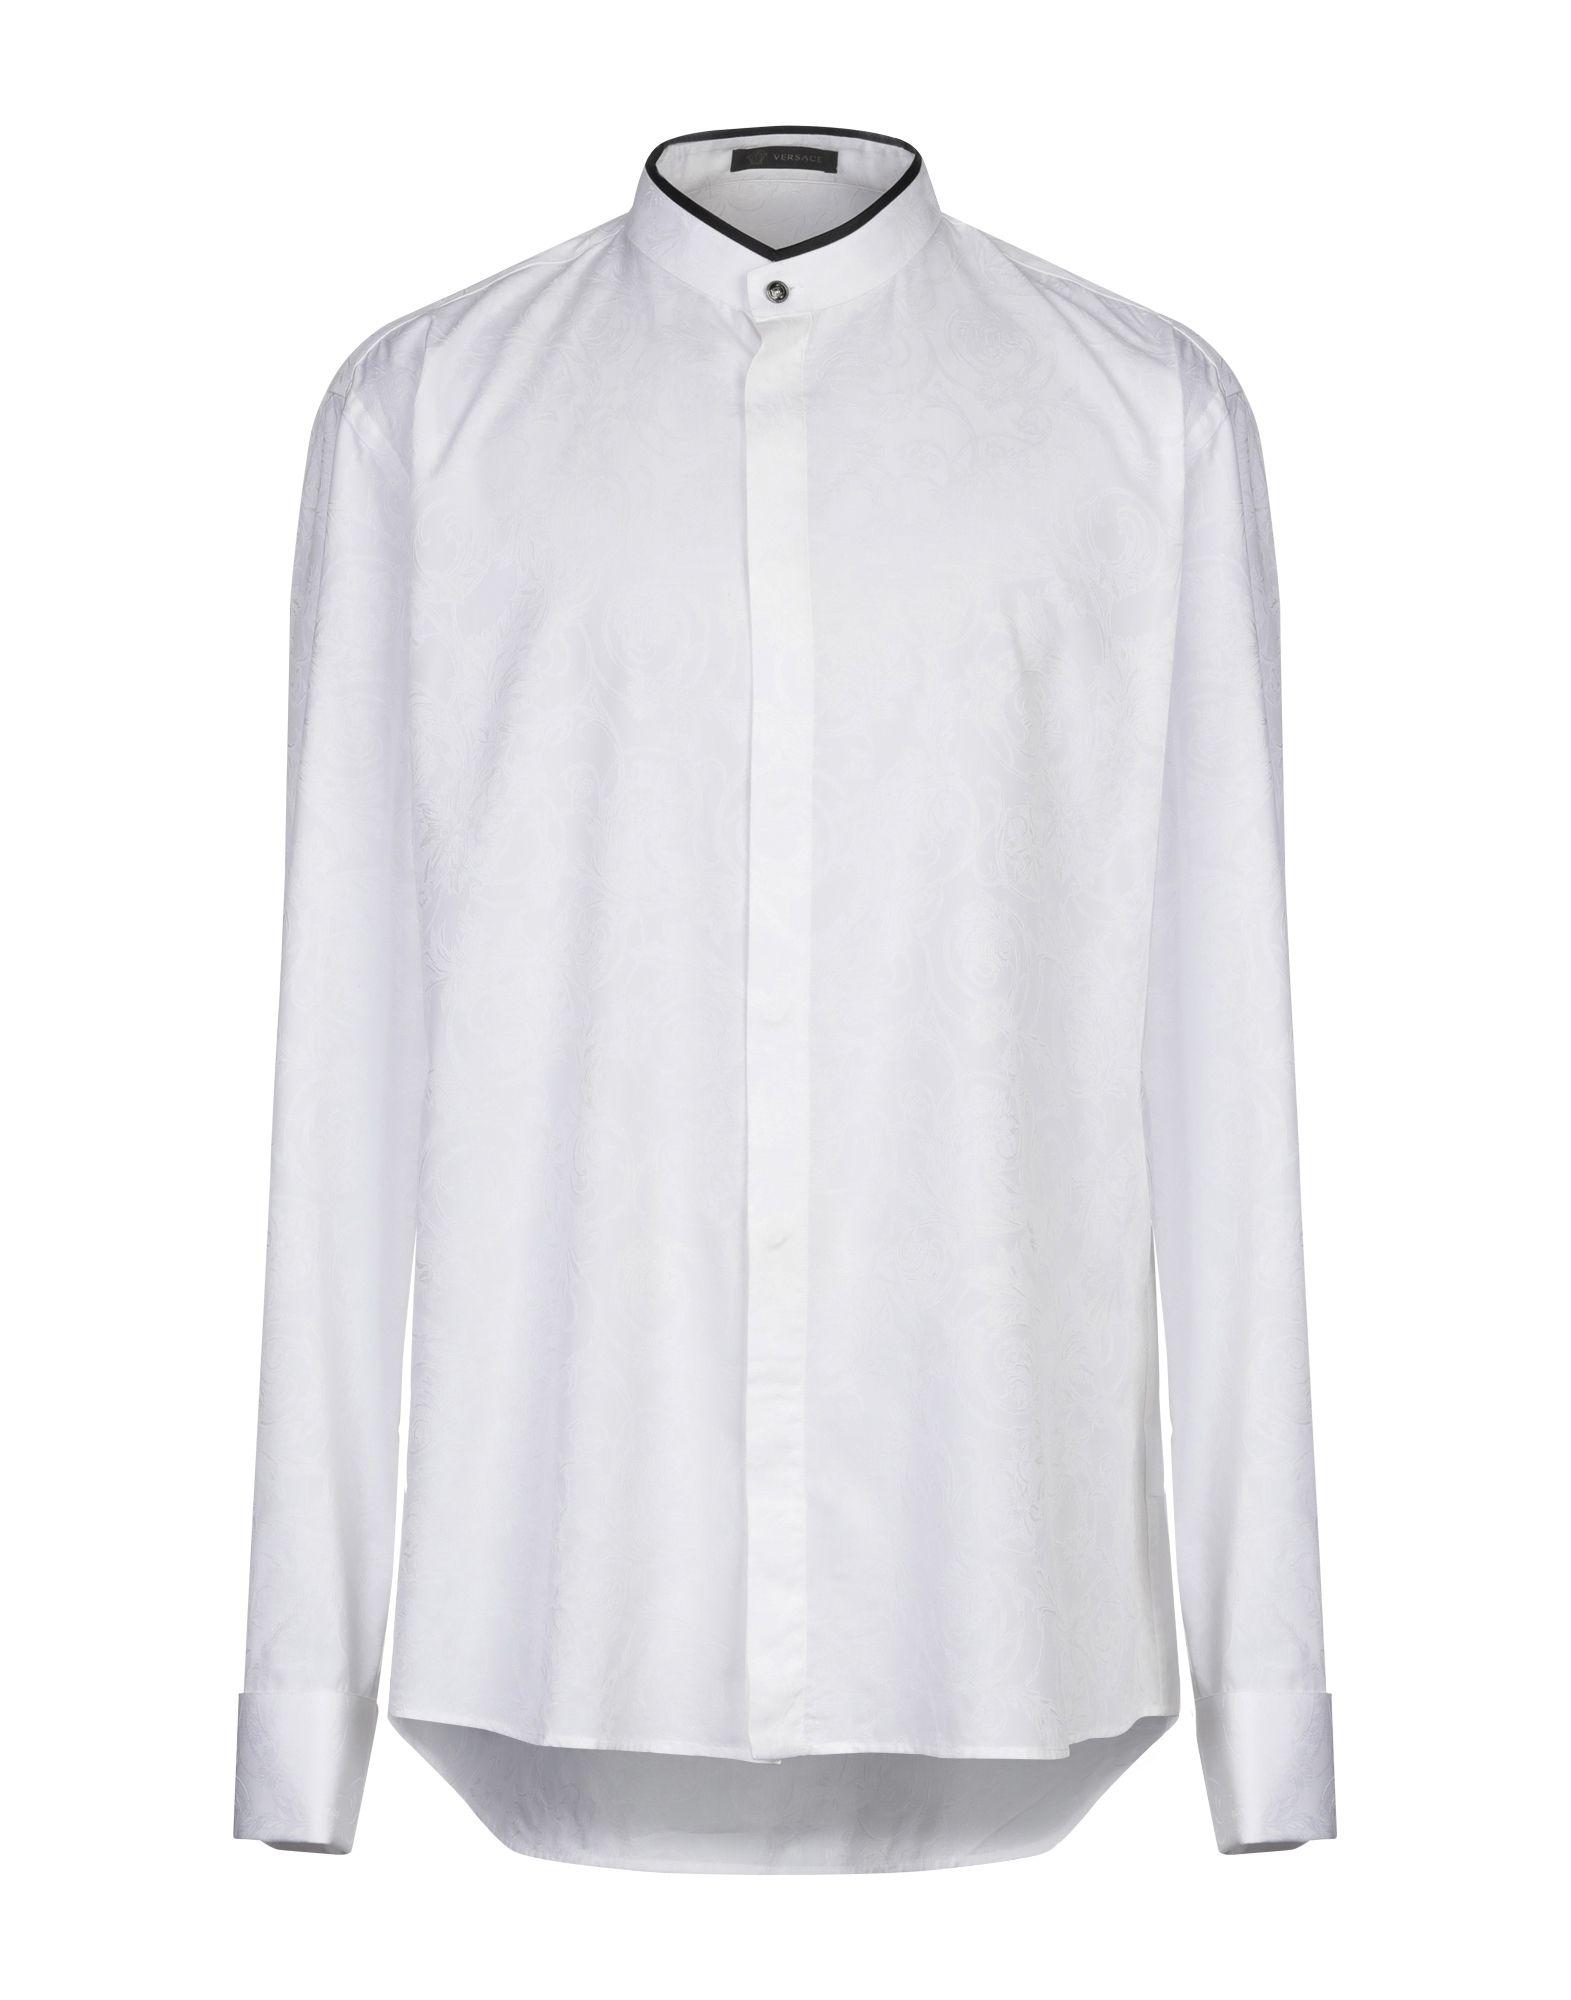 Versace Shirt in White for Men - Lyst